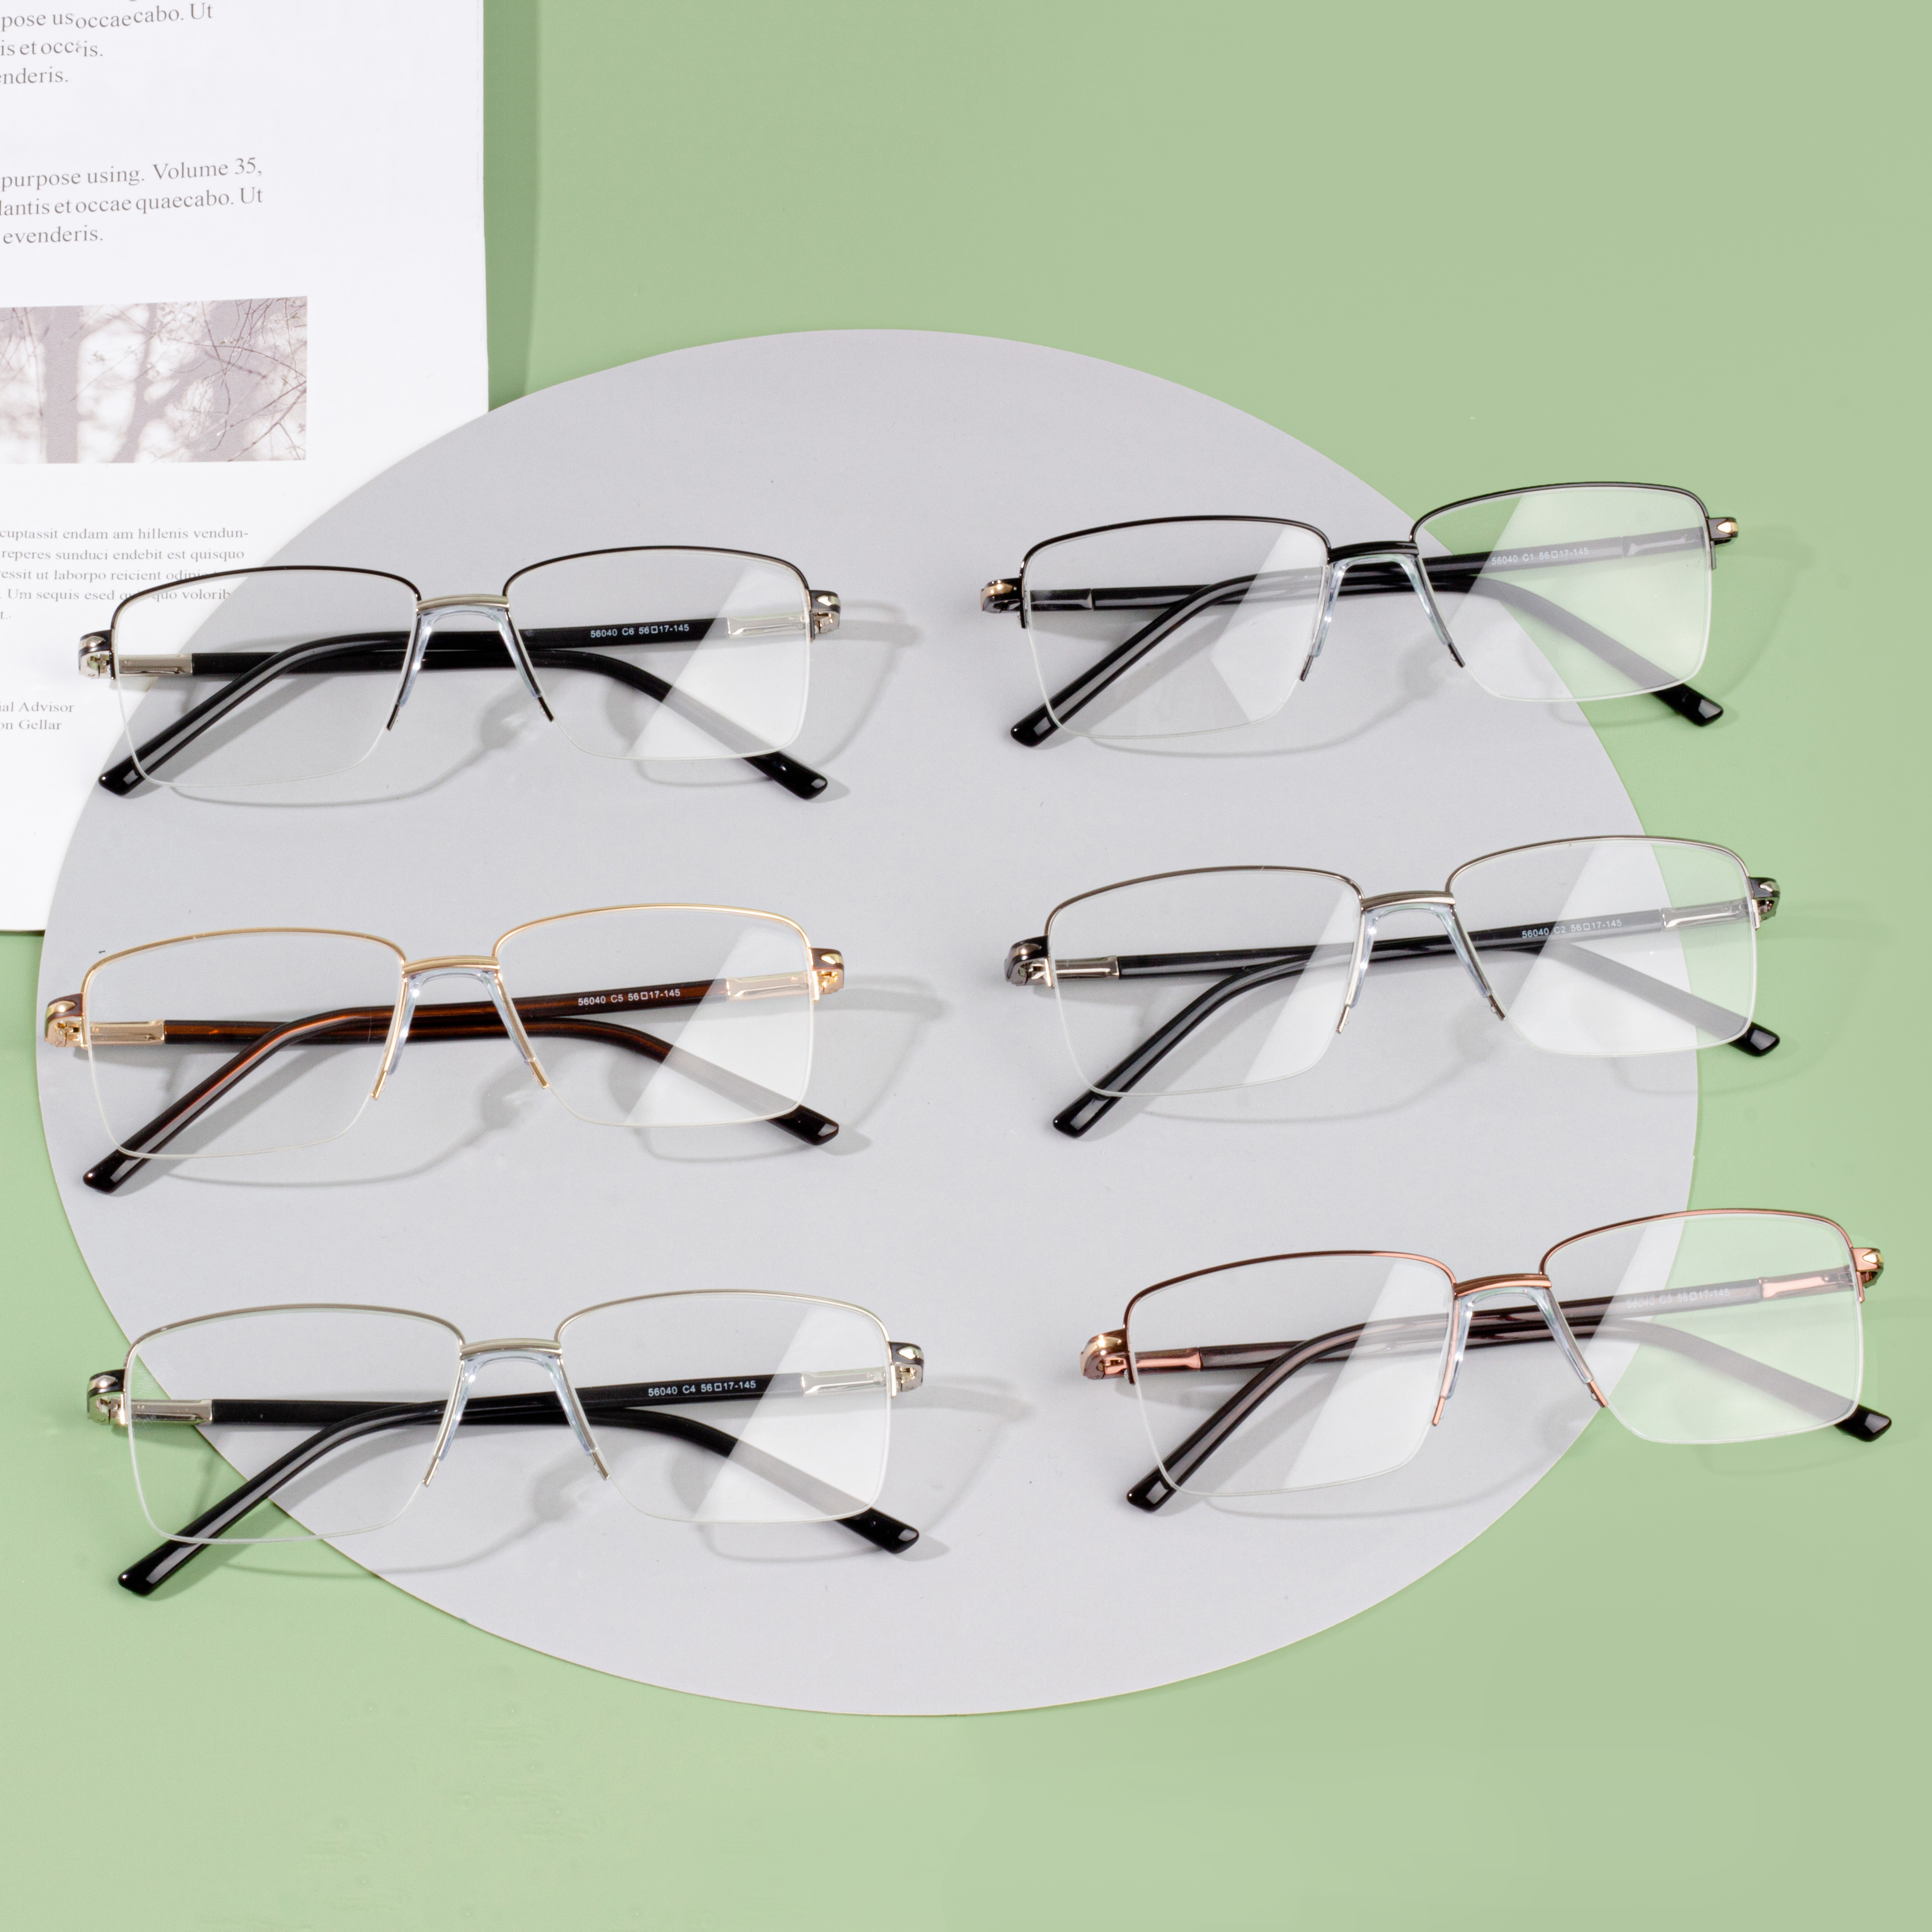 Rame de ochelari asortate ieftine stoc metalic gata pentru barbati